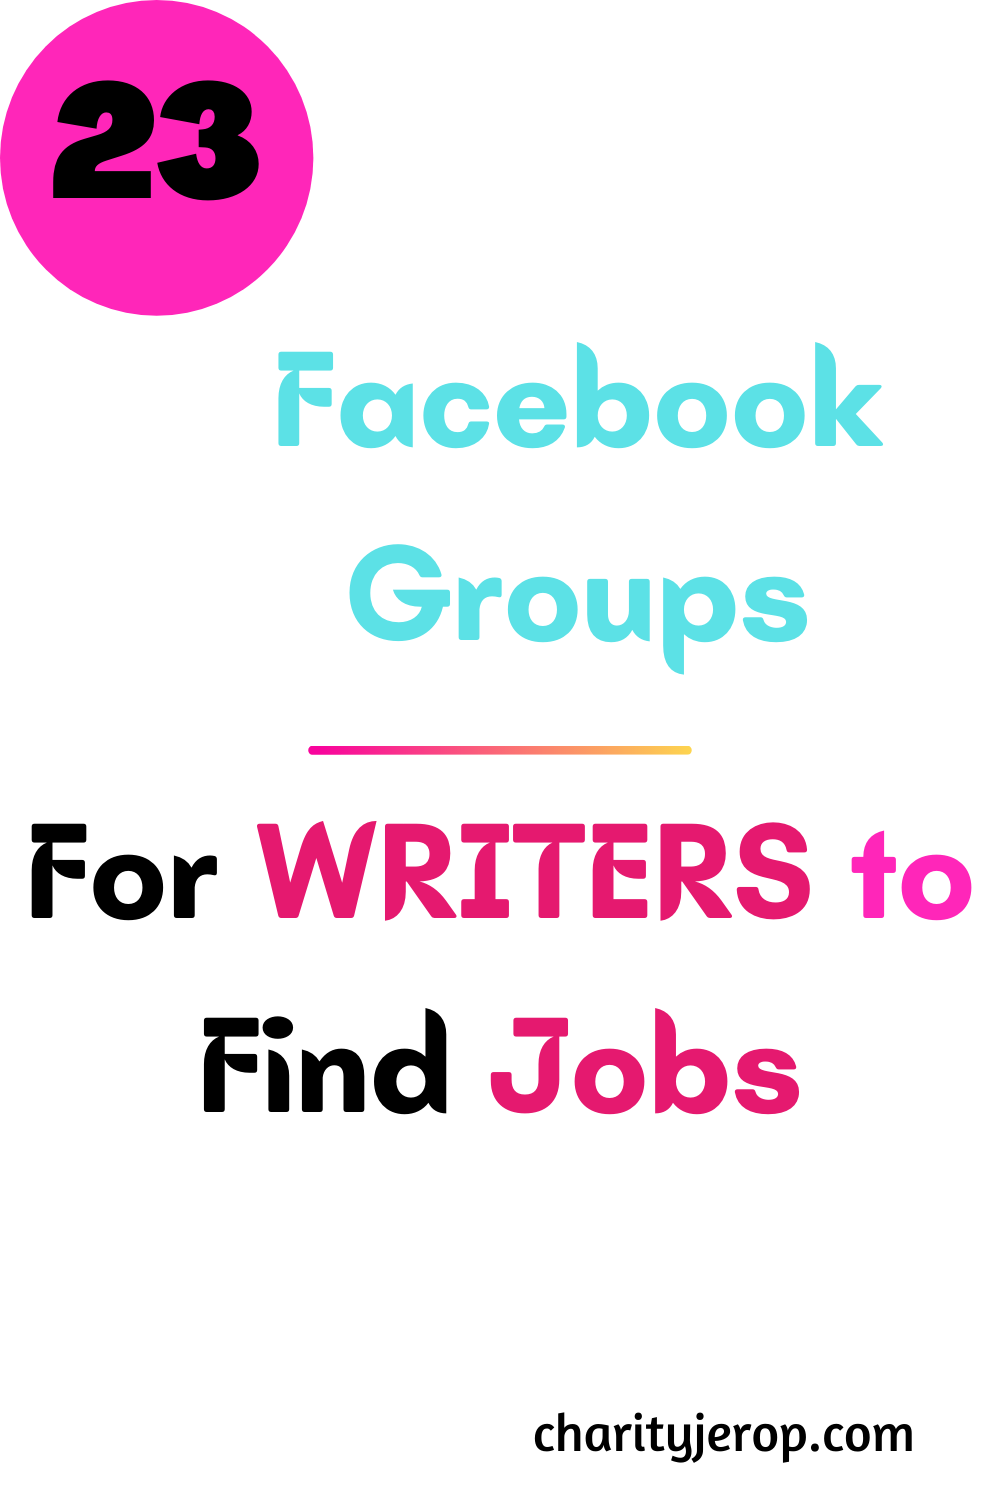 Freelance writing jobs on Facebook